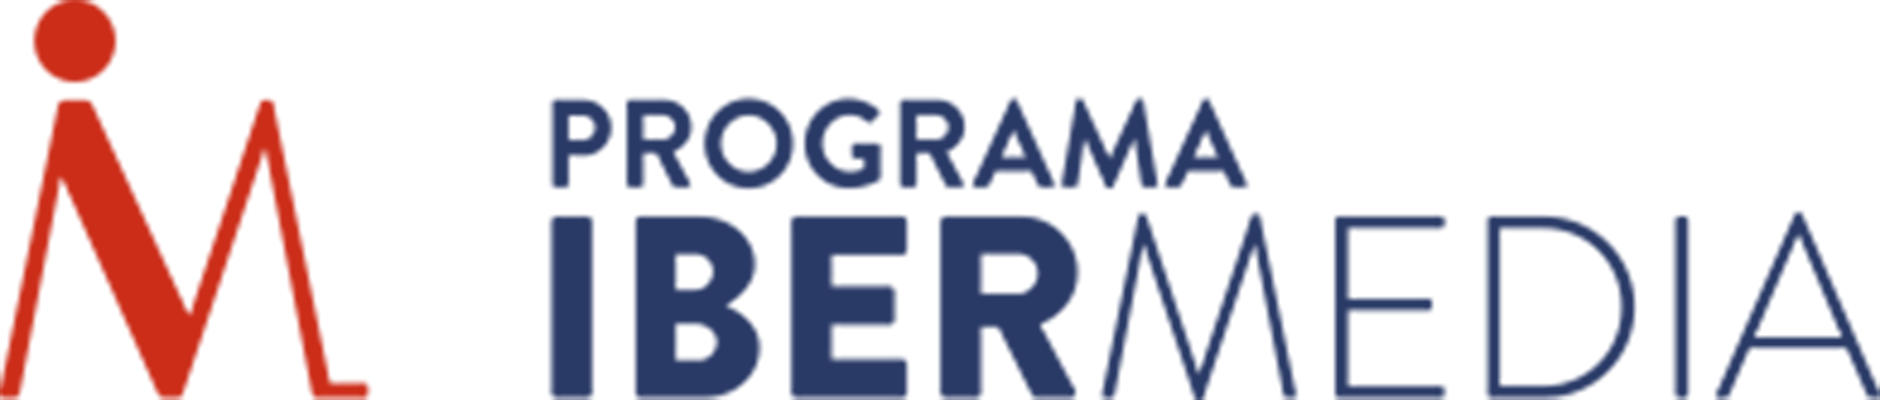 Programa Ibermedia Logo